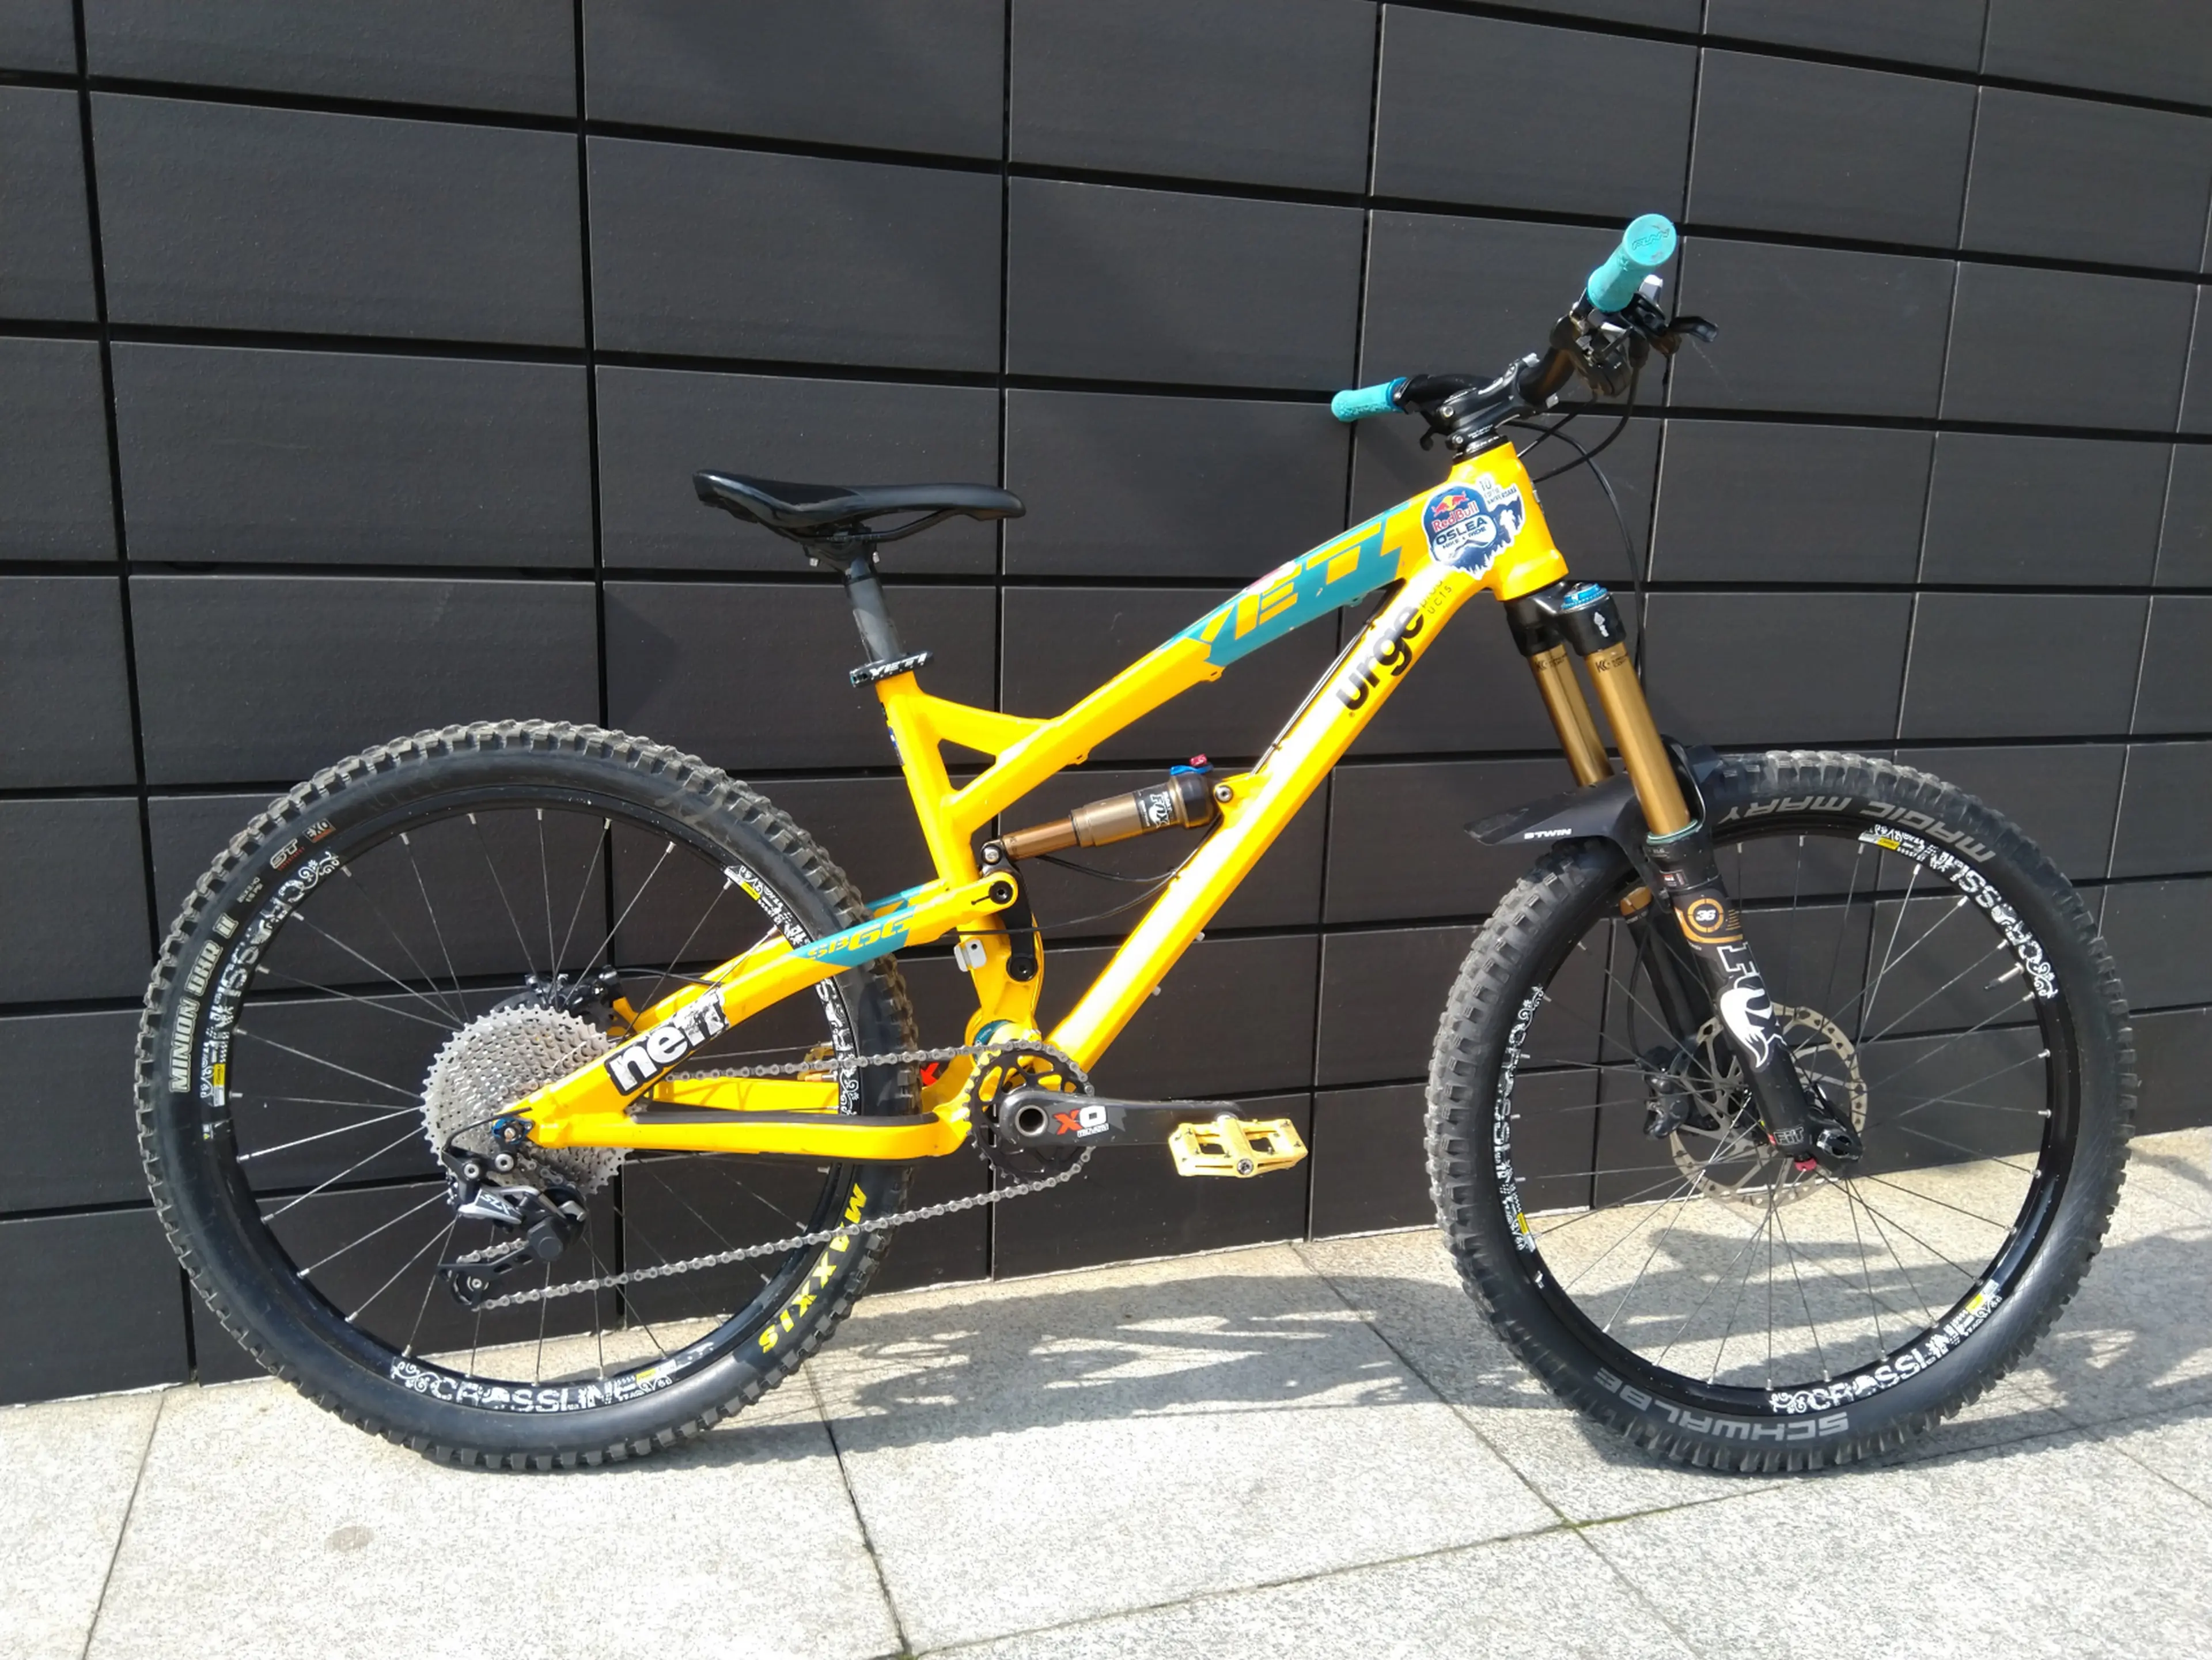 5. (Vândută) Bicicletă Yeti SB66, mărime S, roți 26", an 2014